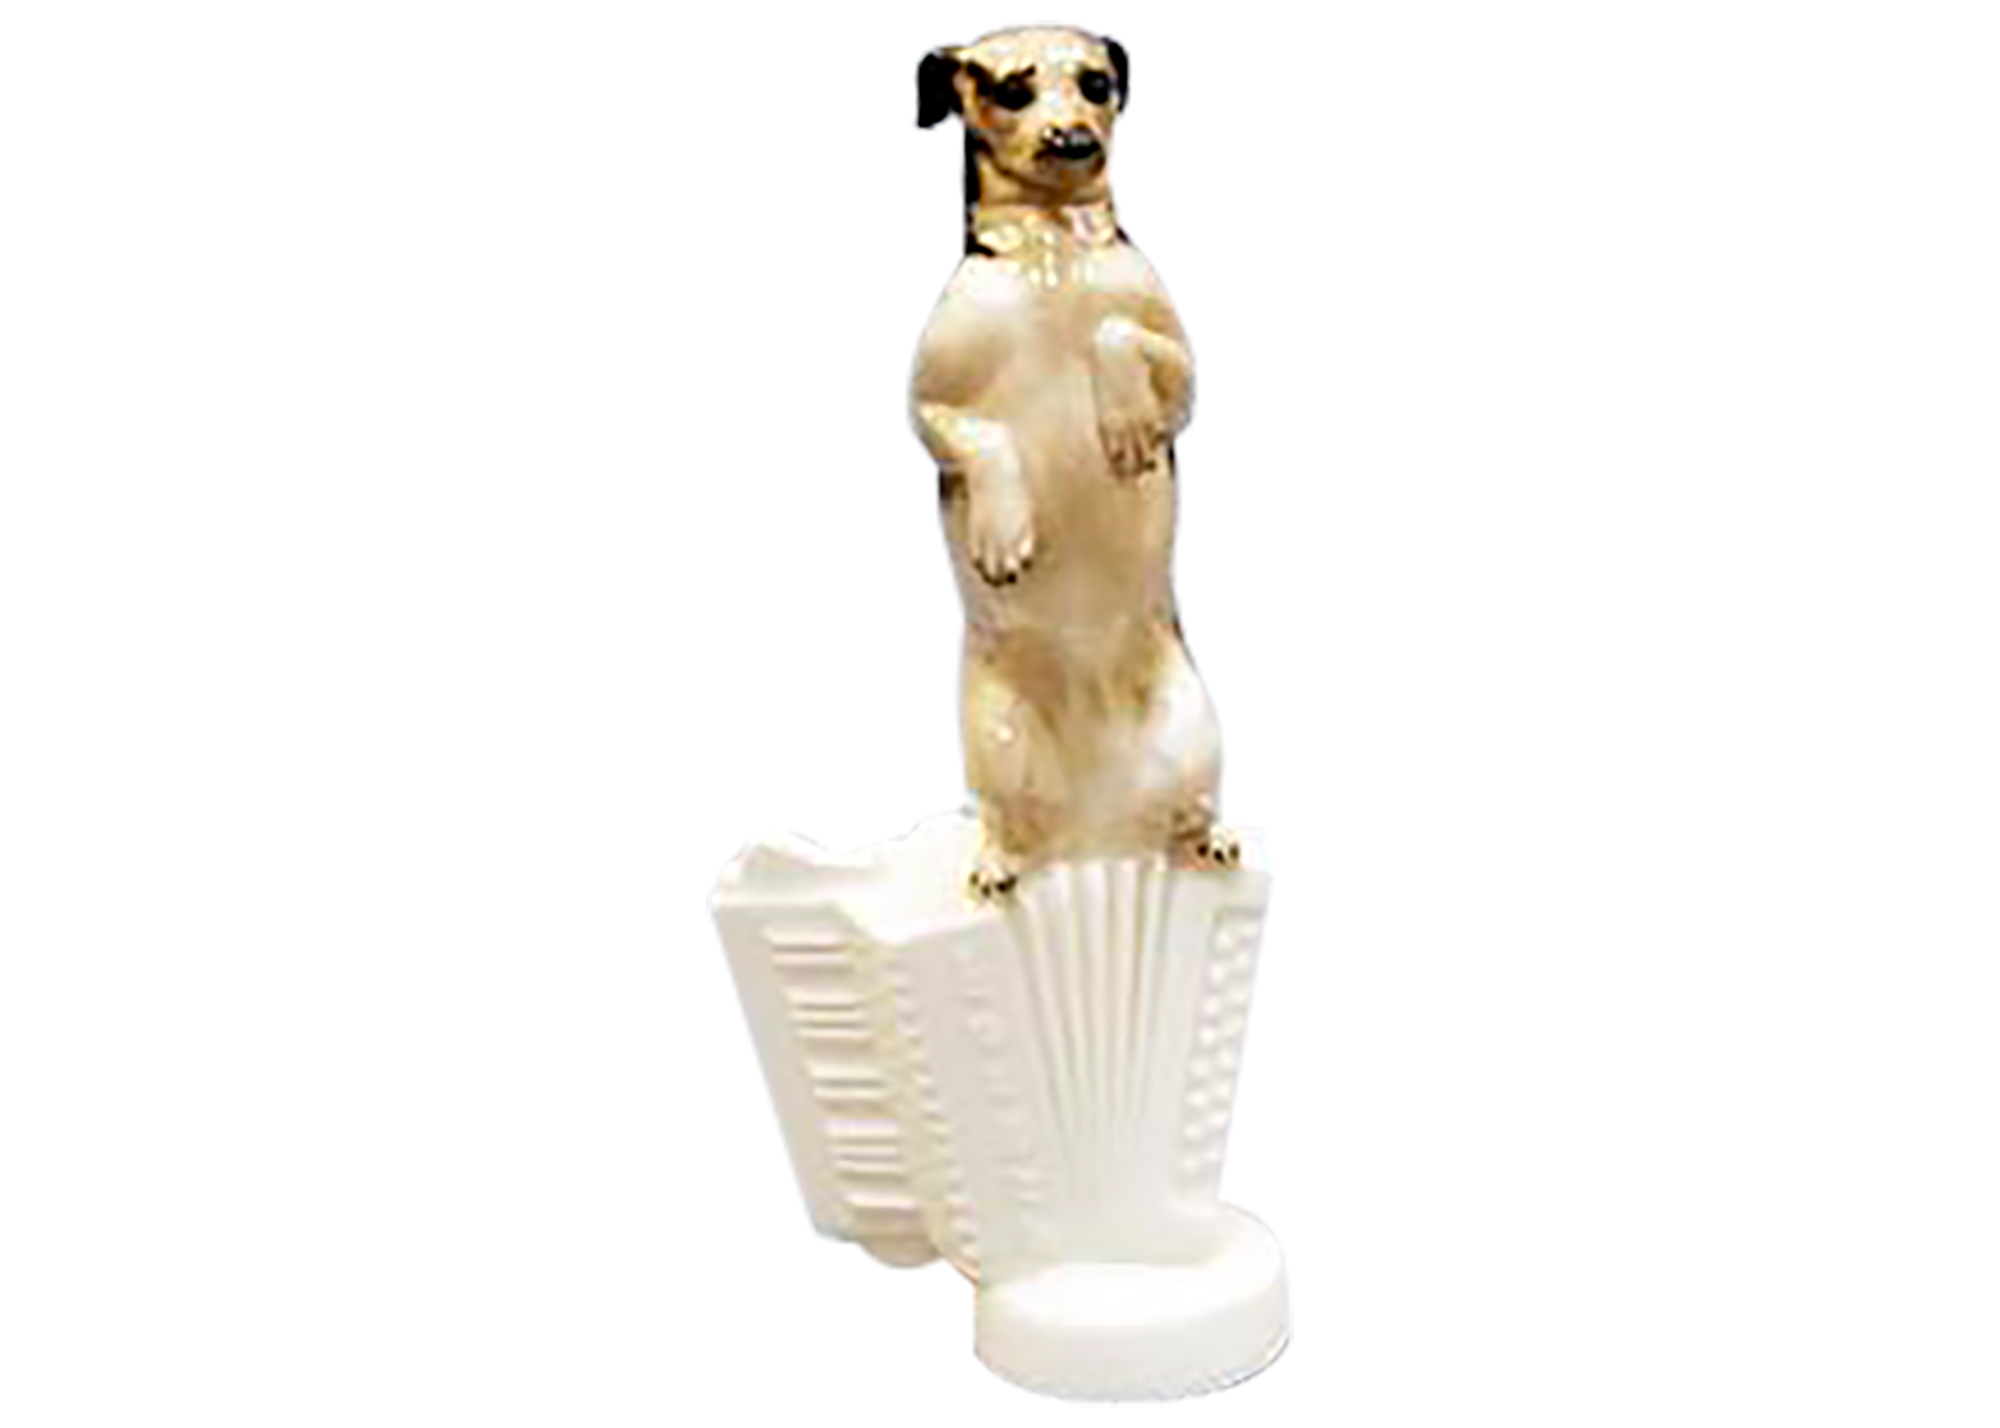 Buy Dancing Dog Figurine at GoldenCockerel.com